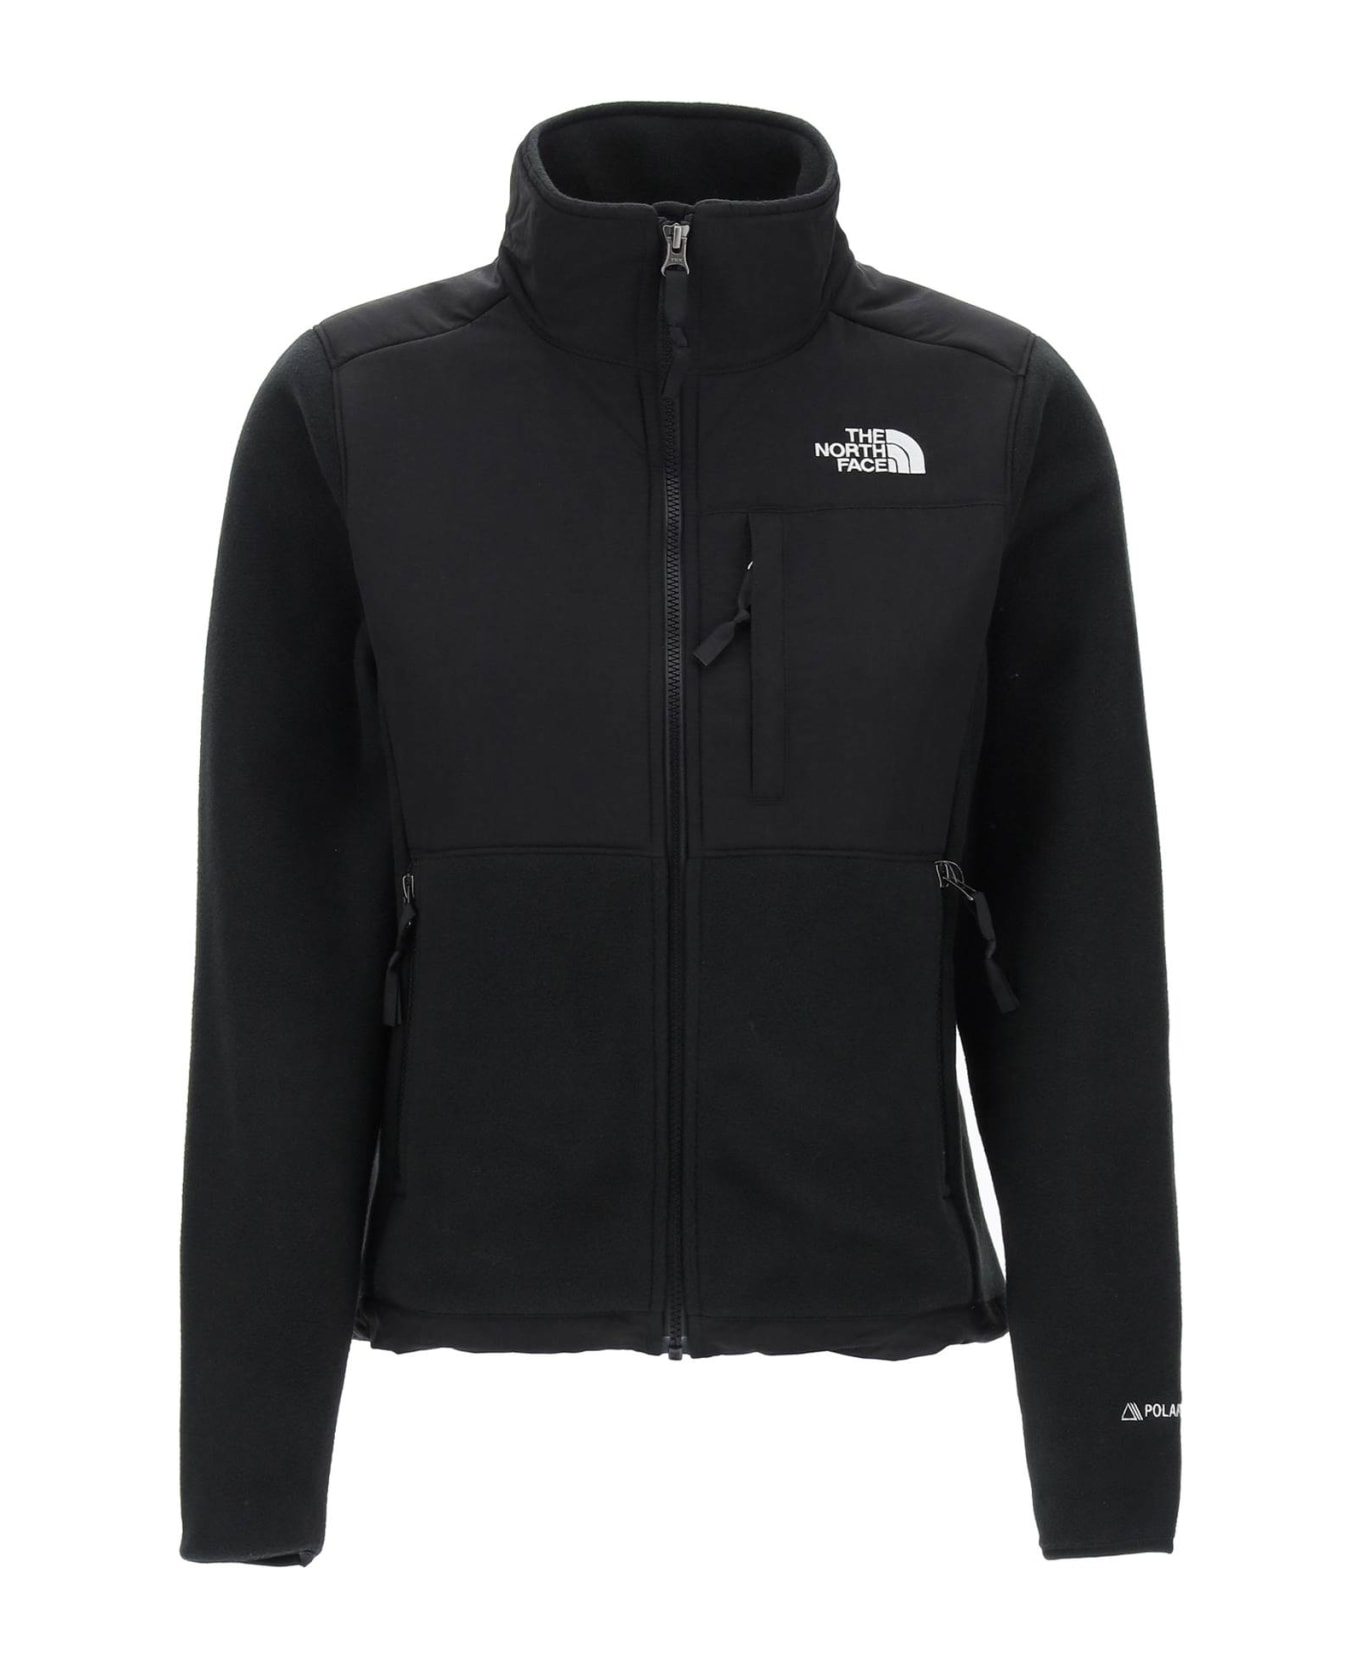 The North Face Denali Jacket In Fleece And Nylon - TNF BLACK (Black)